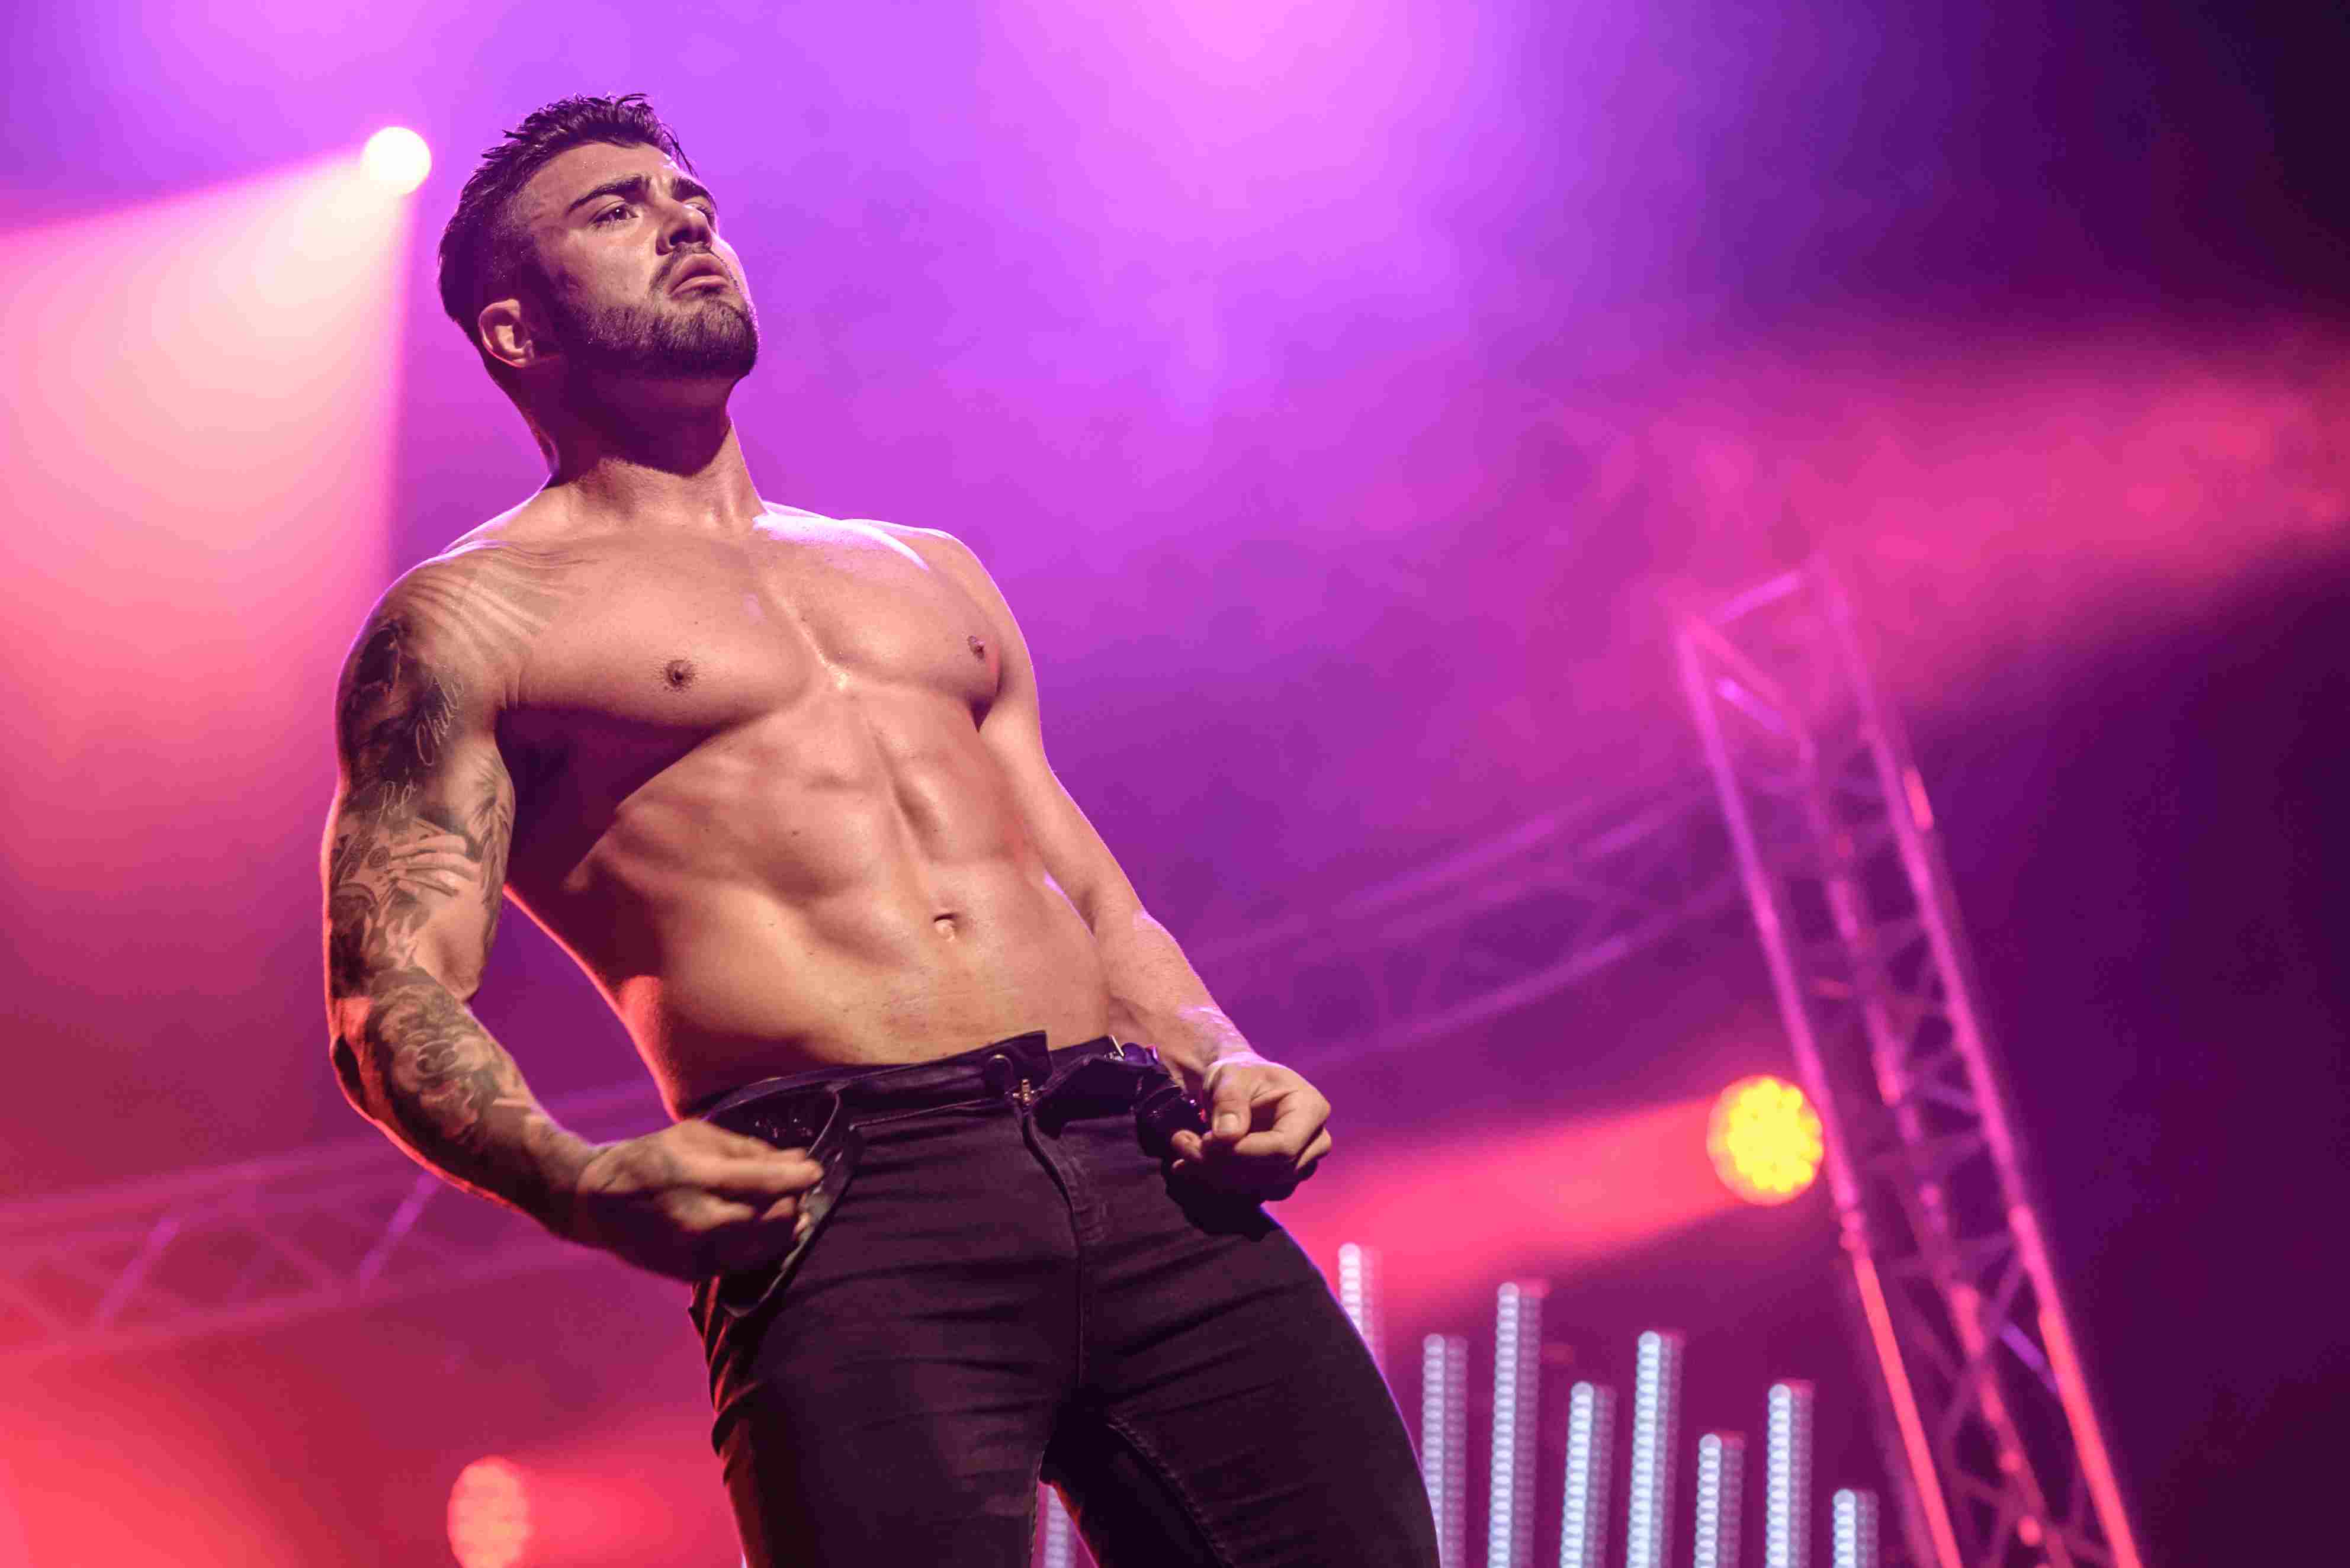 brandon bastian add male stripper on stage photo